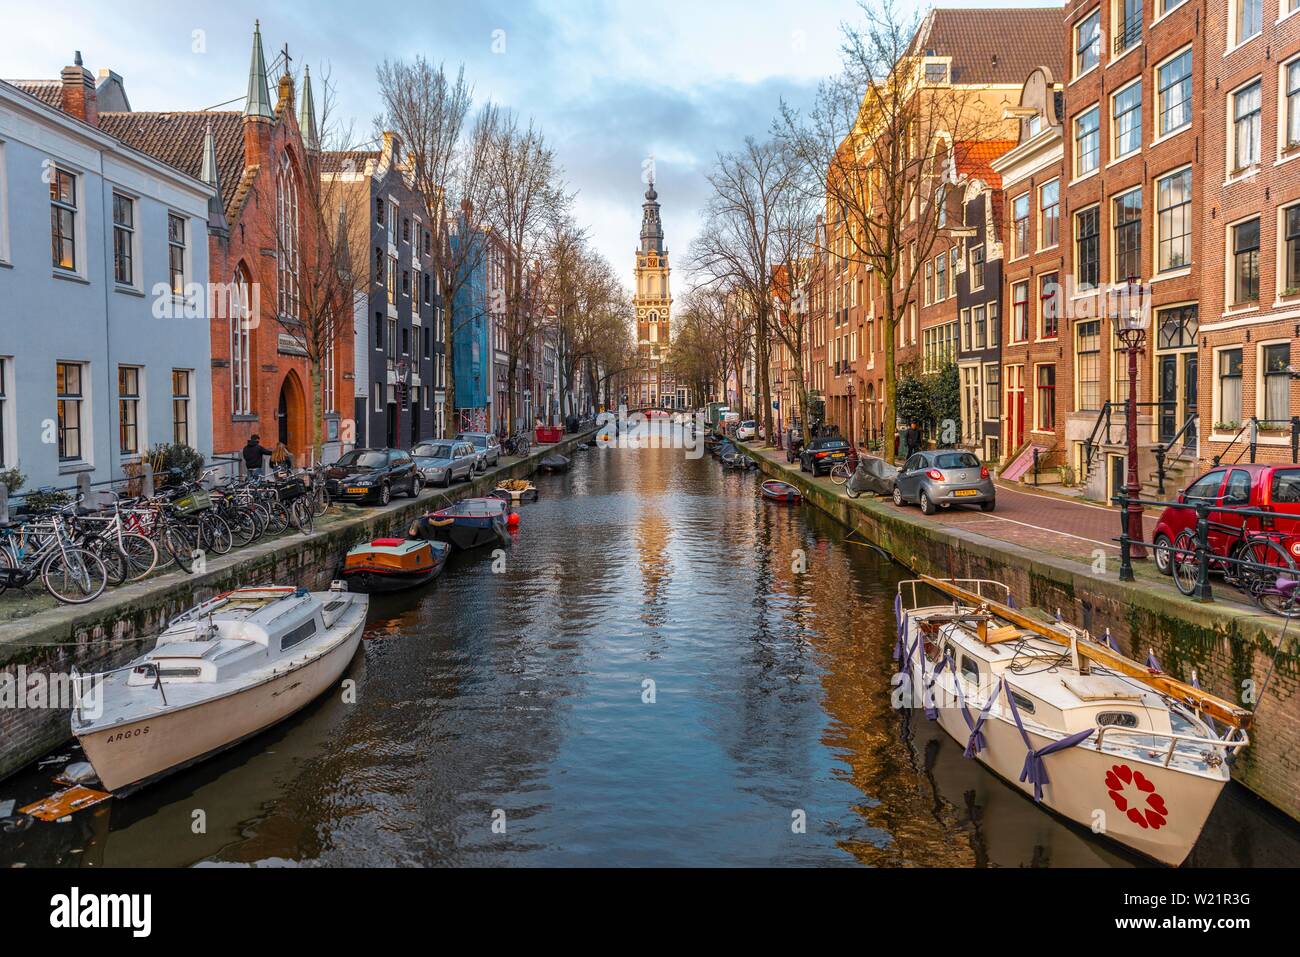 Zuiderkerk, church, canal with boats, Groenburgwal, Amsterdam, Holland, Netherlands Stock Photo